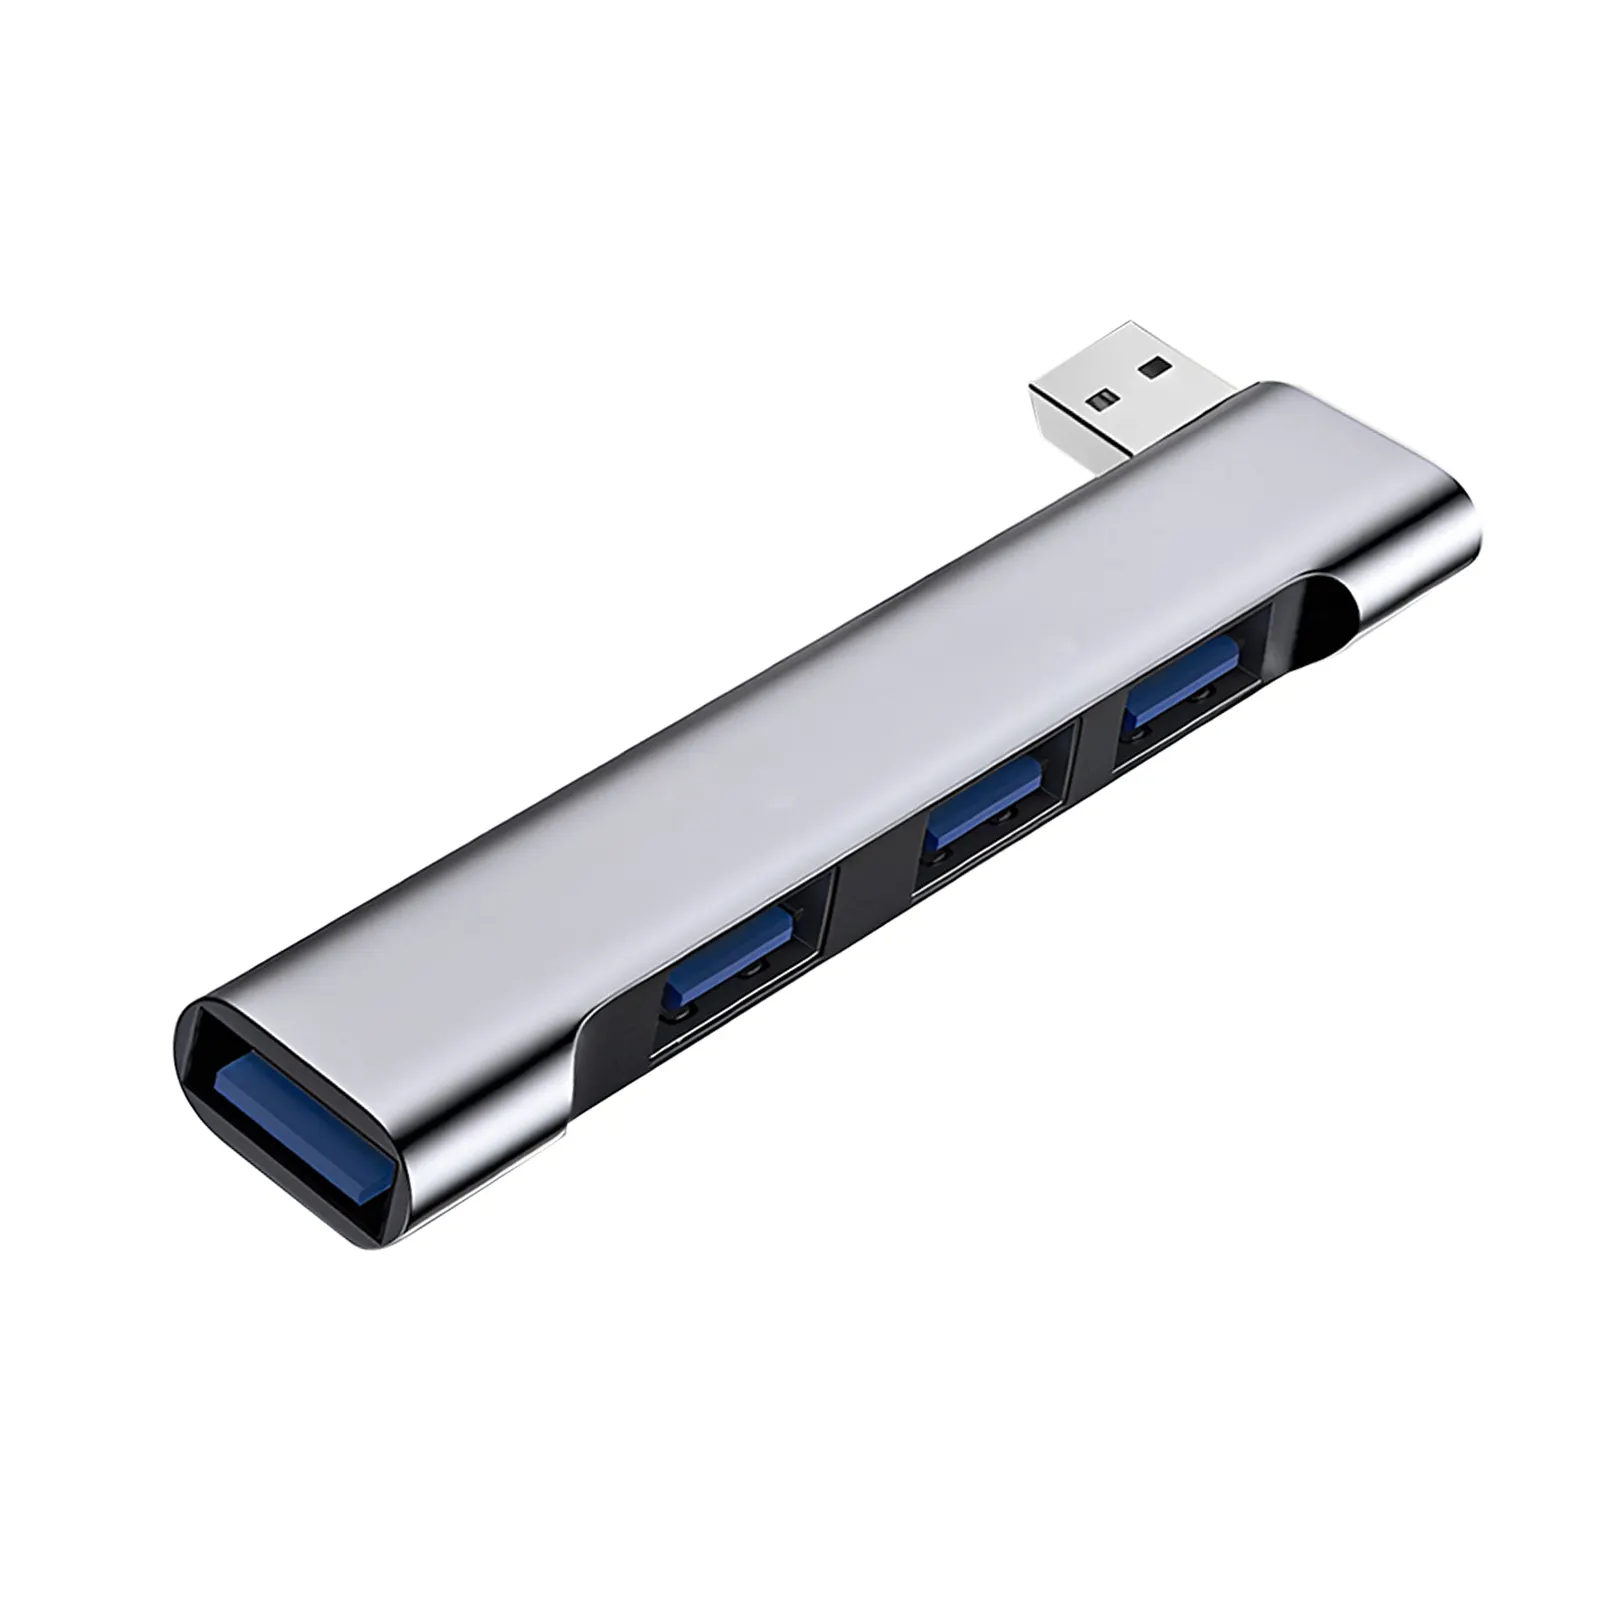 4 in 1 USB Splitter USB Expanderสําหรับแล็ปท็อปพีซี Mac เครื่องพิมพ์แฟลชไดรฟ์มือถือ HDD โน้ตบุ๊ค USB Splitter Hub